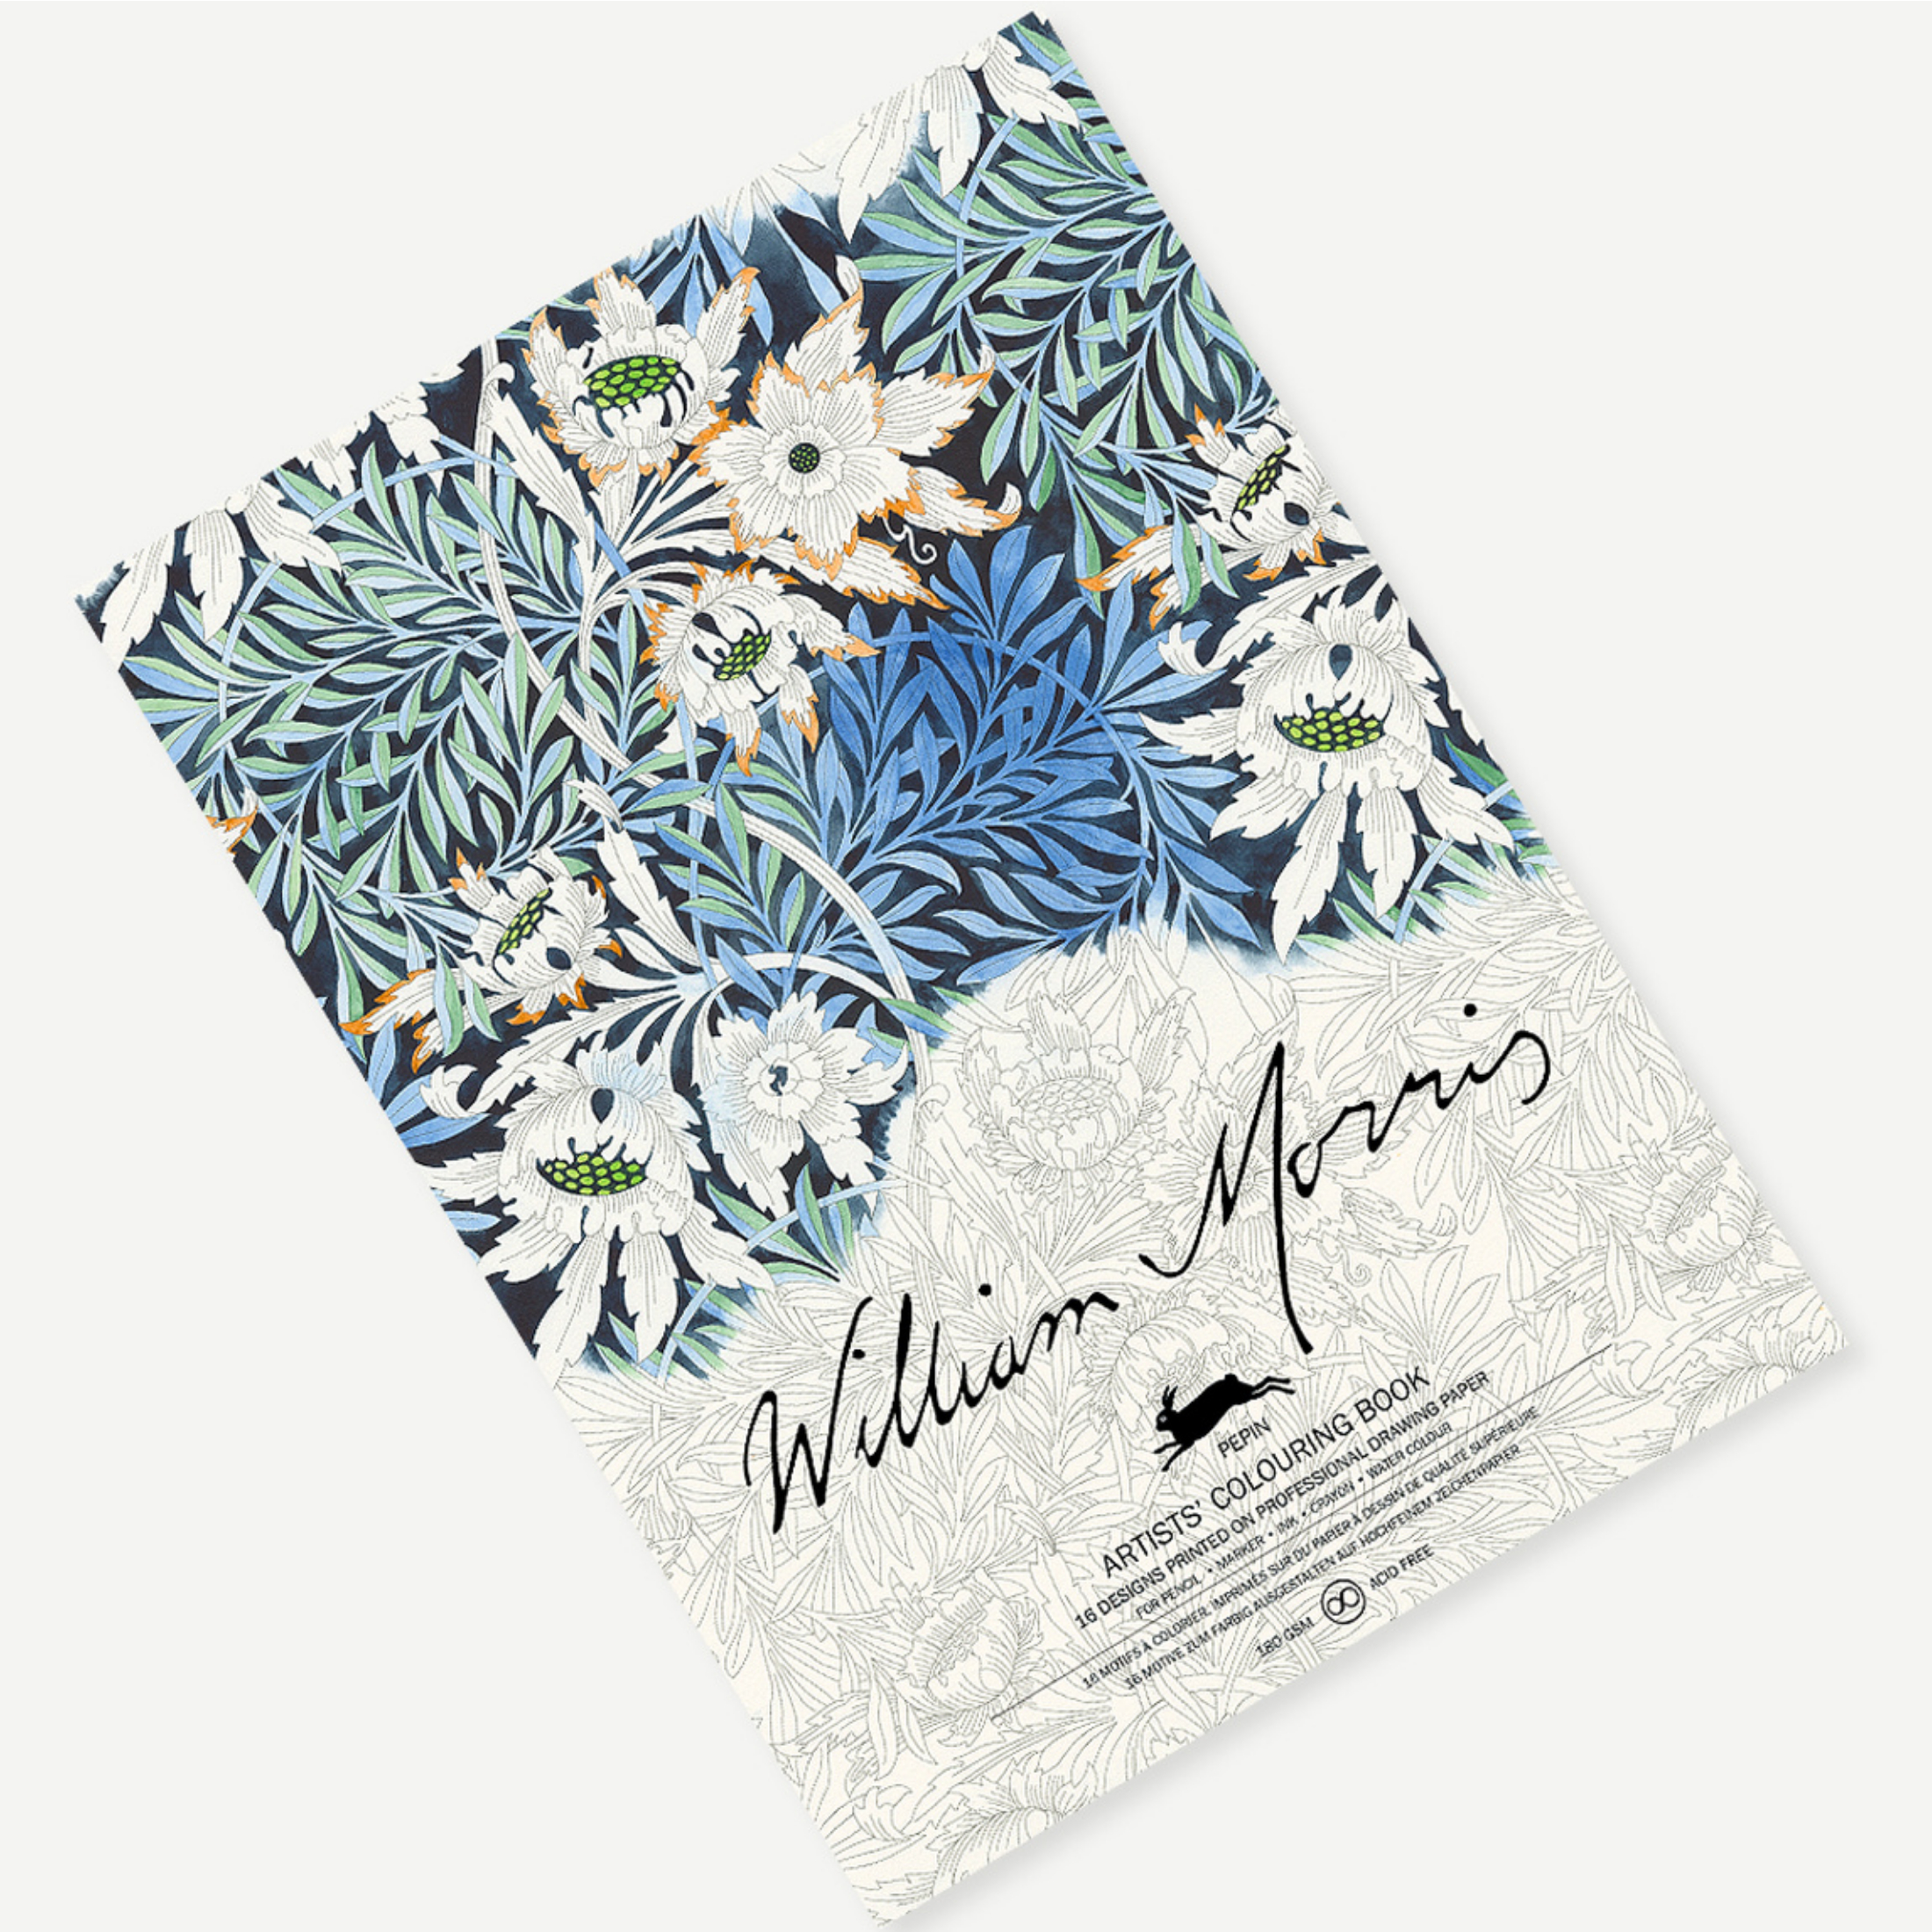 Livro de Colorir William Morris 16 Desenhos Pepin